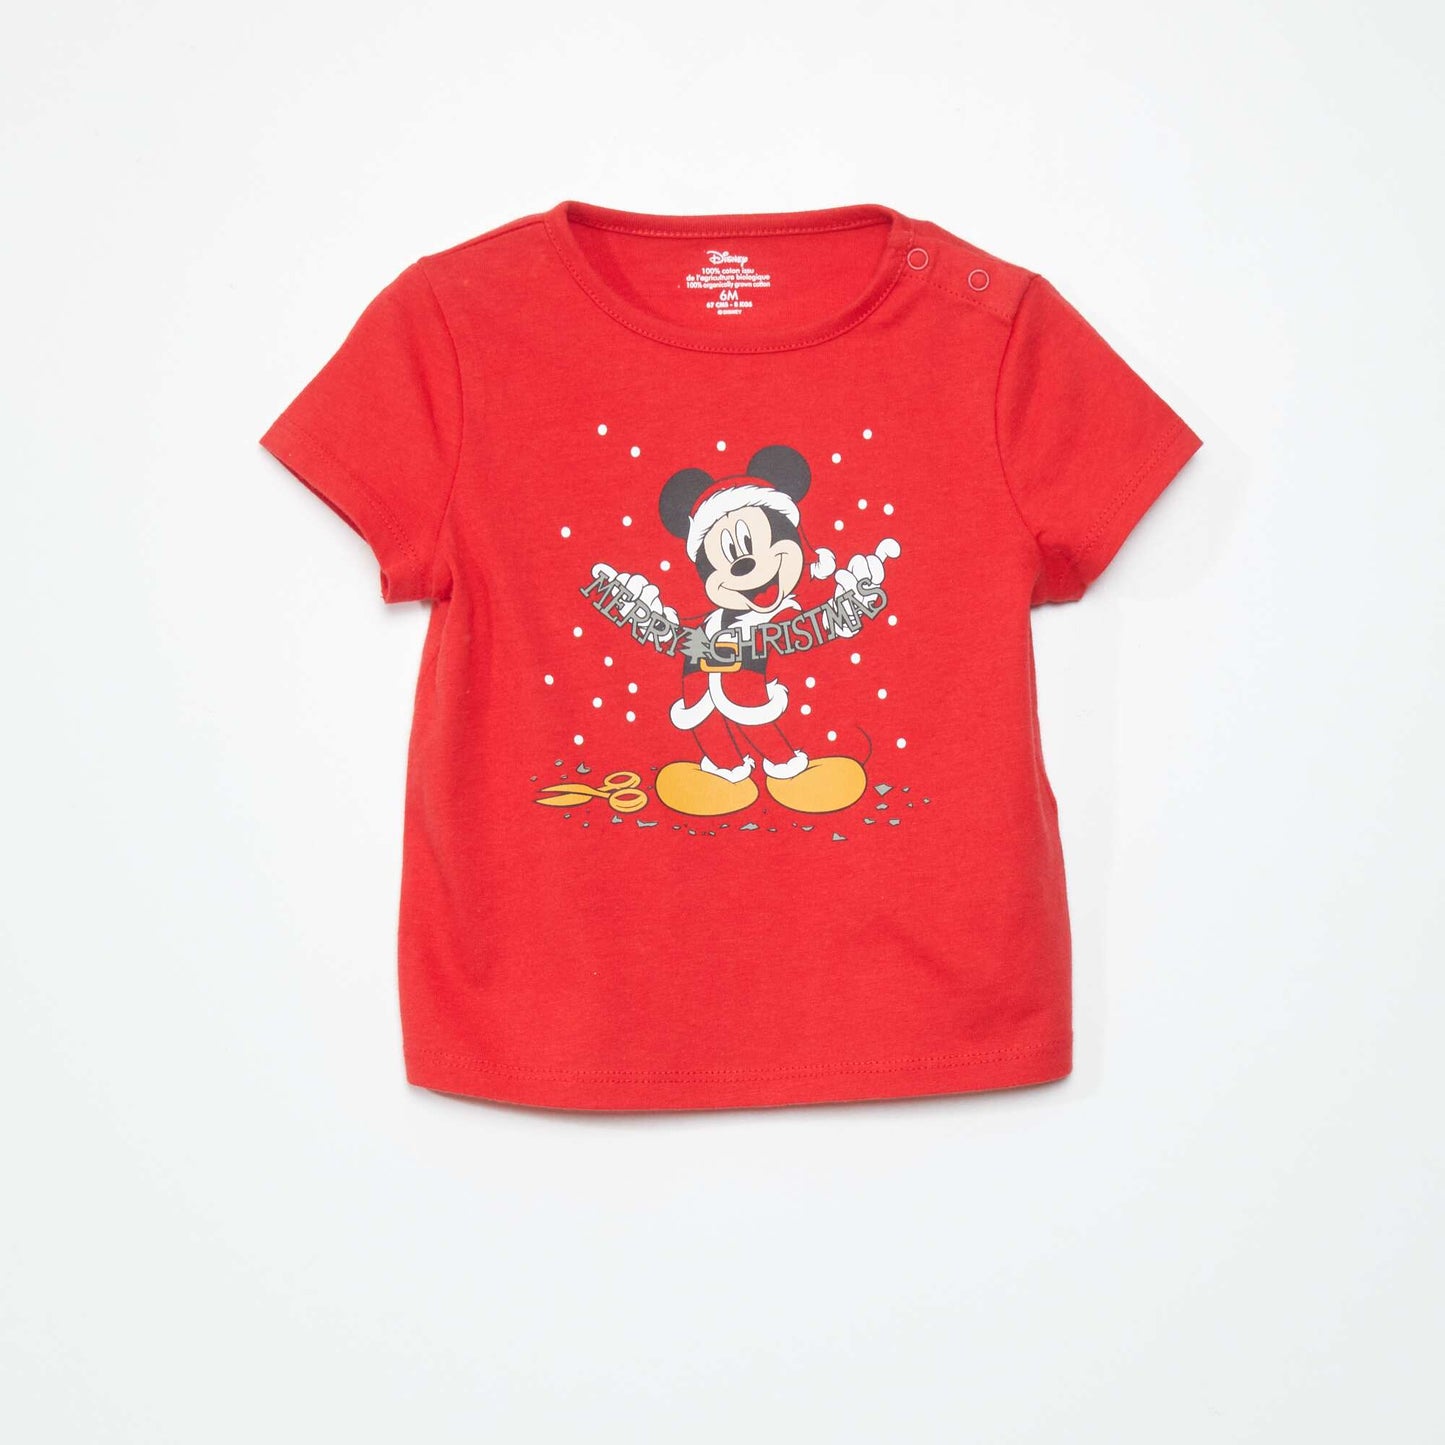 Ensemble t-shirt + short  'Mickey' - 2 pièces Rouge/bleu